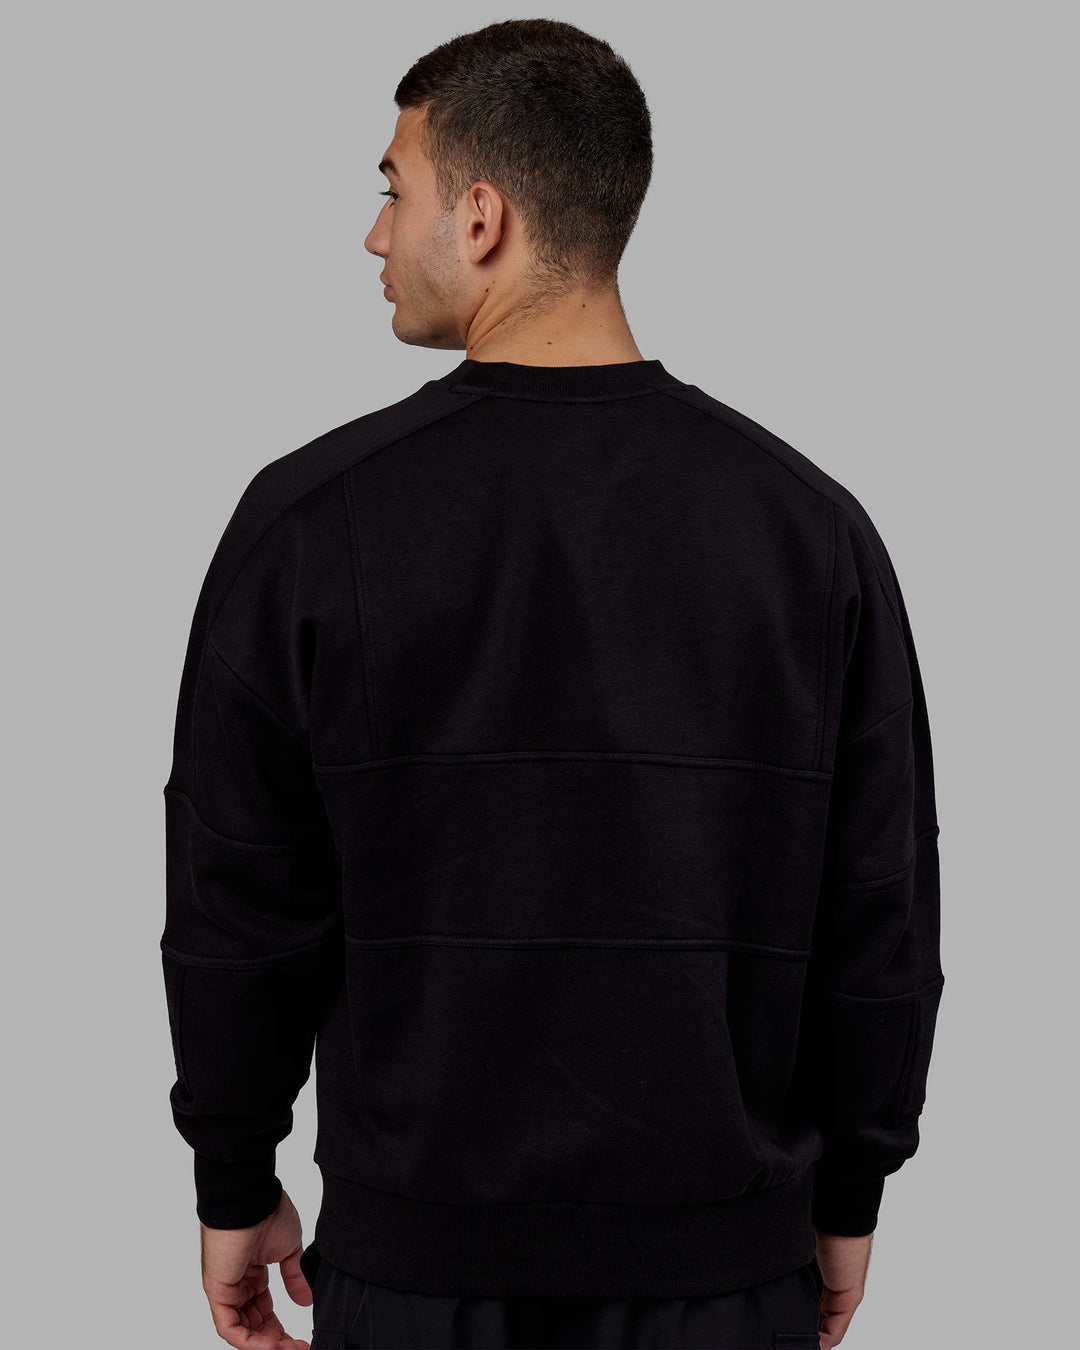 Man wearing Unisex Slam Sweater Oversize - Black-Black